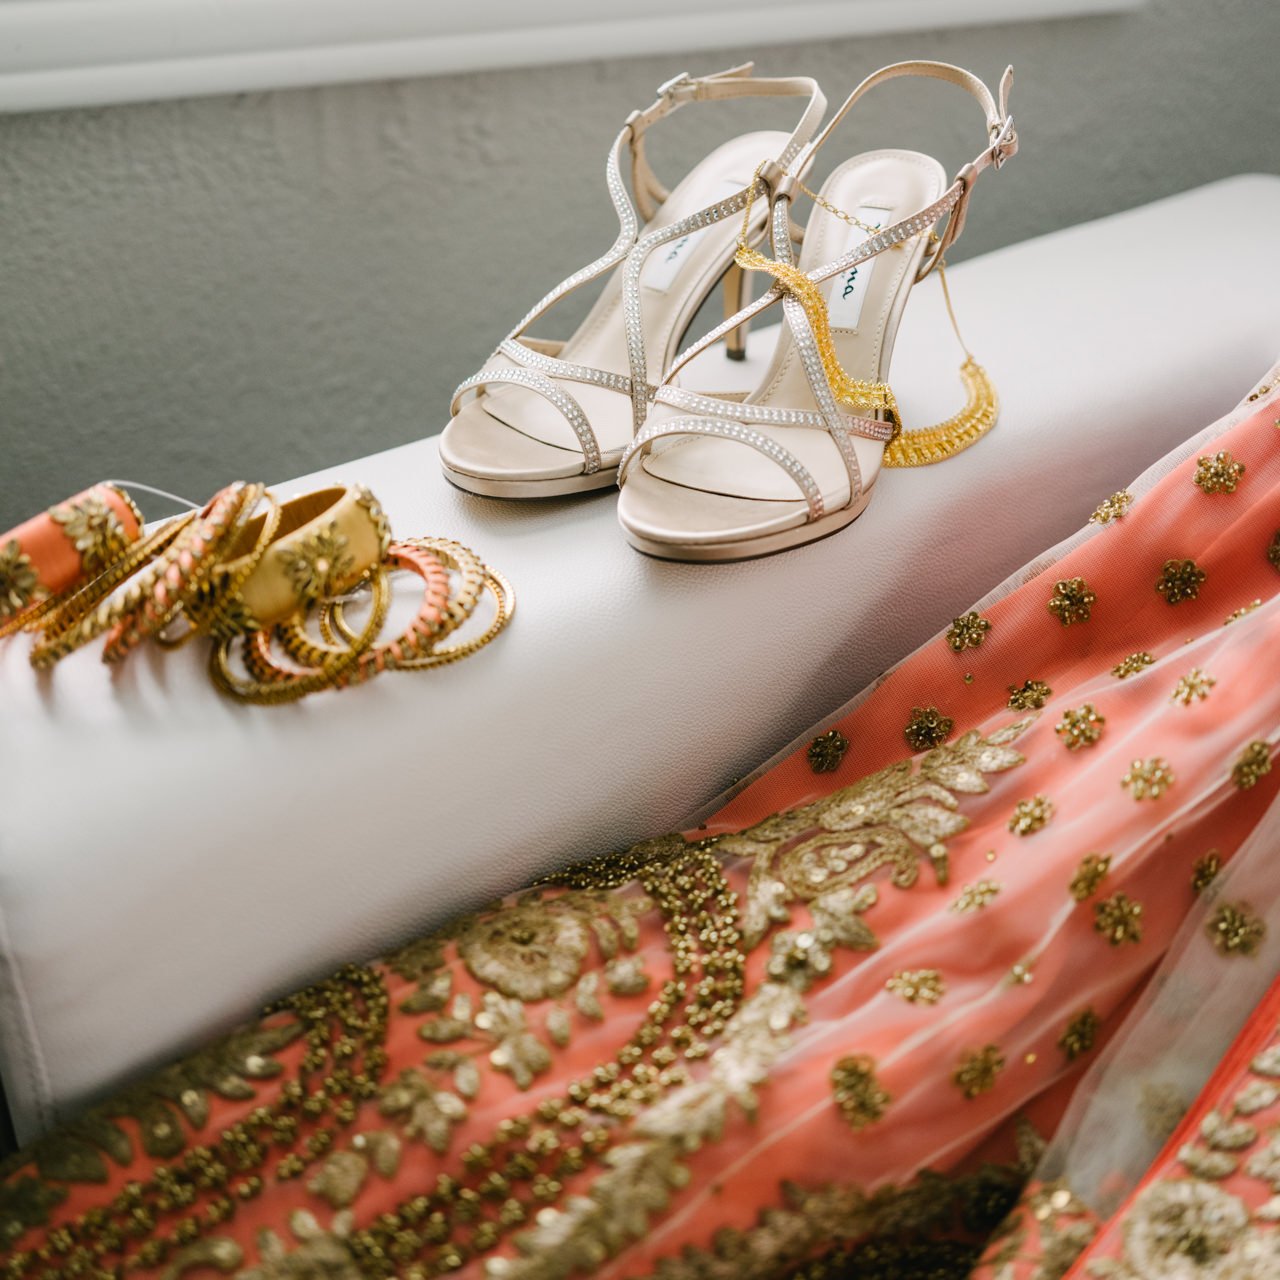  Detail photo of Indian bridal attire and pink and gold sari and bangles 